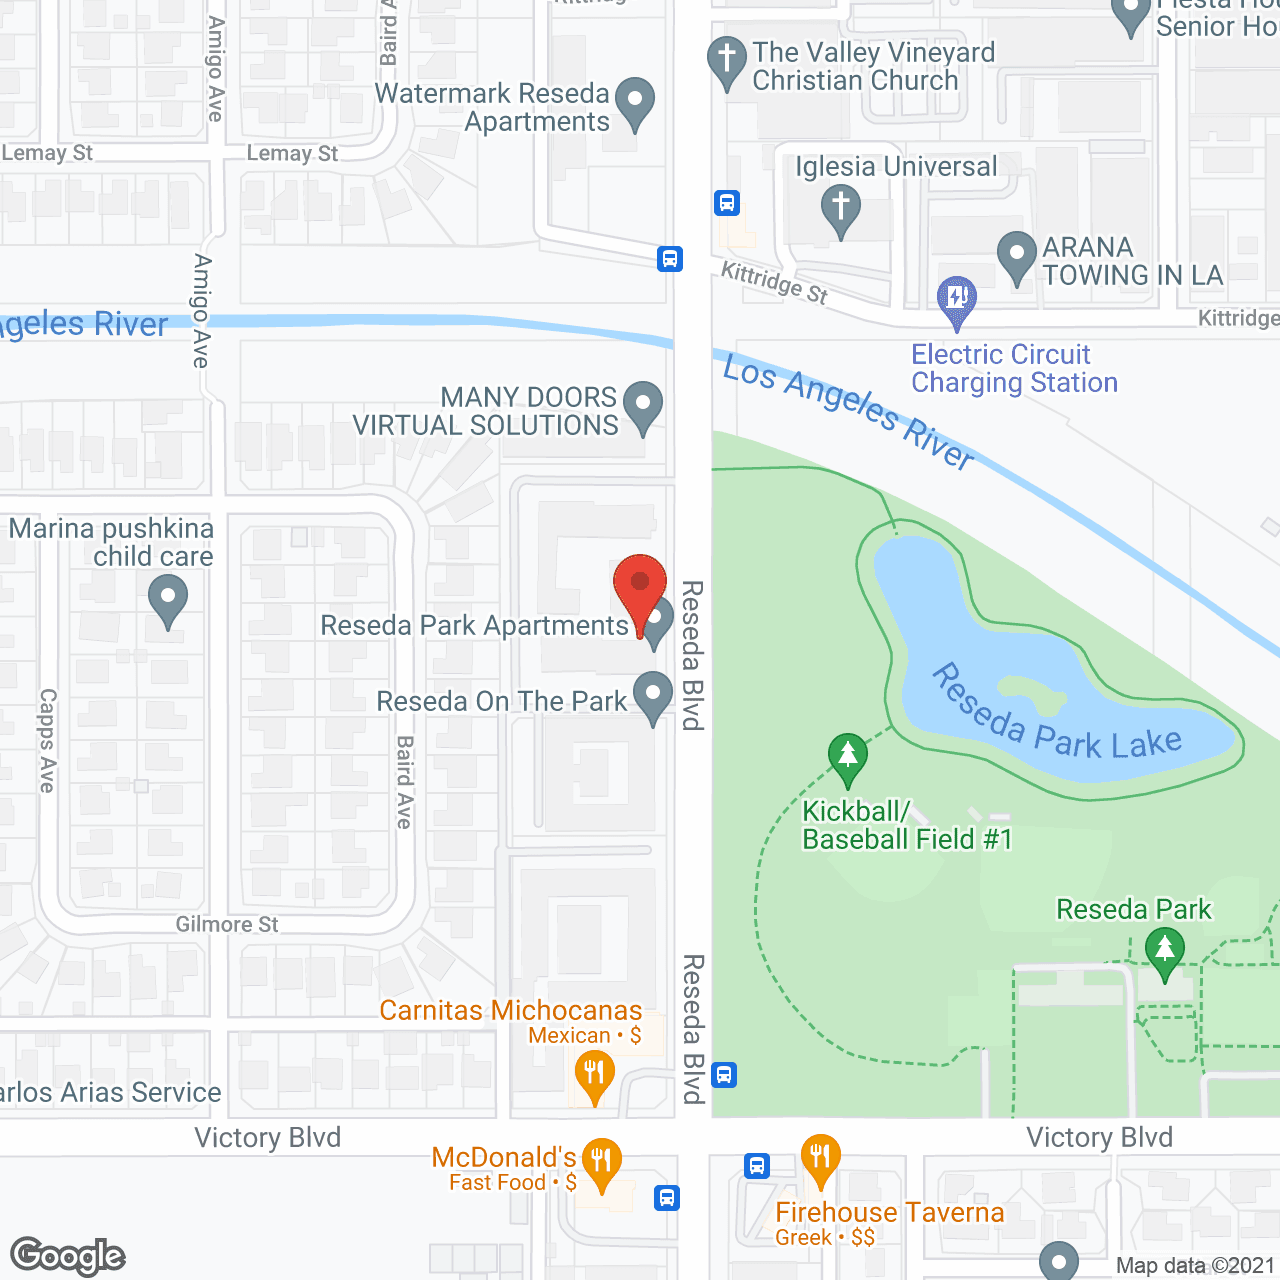 Reseda Park Apartments in google map